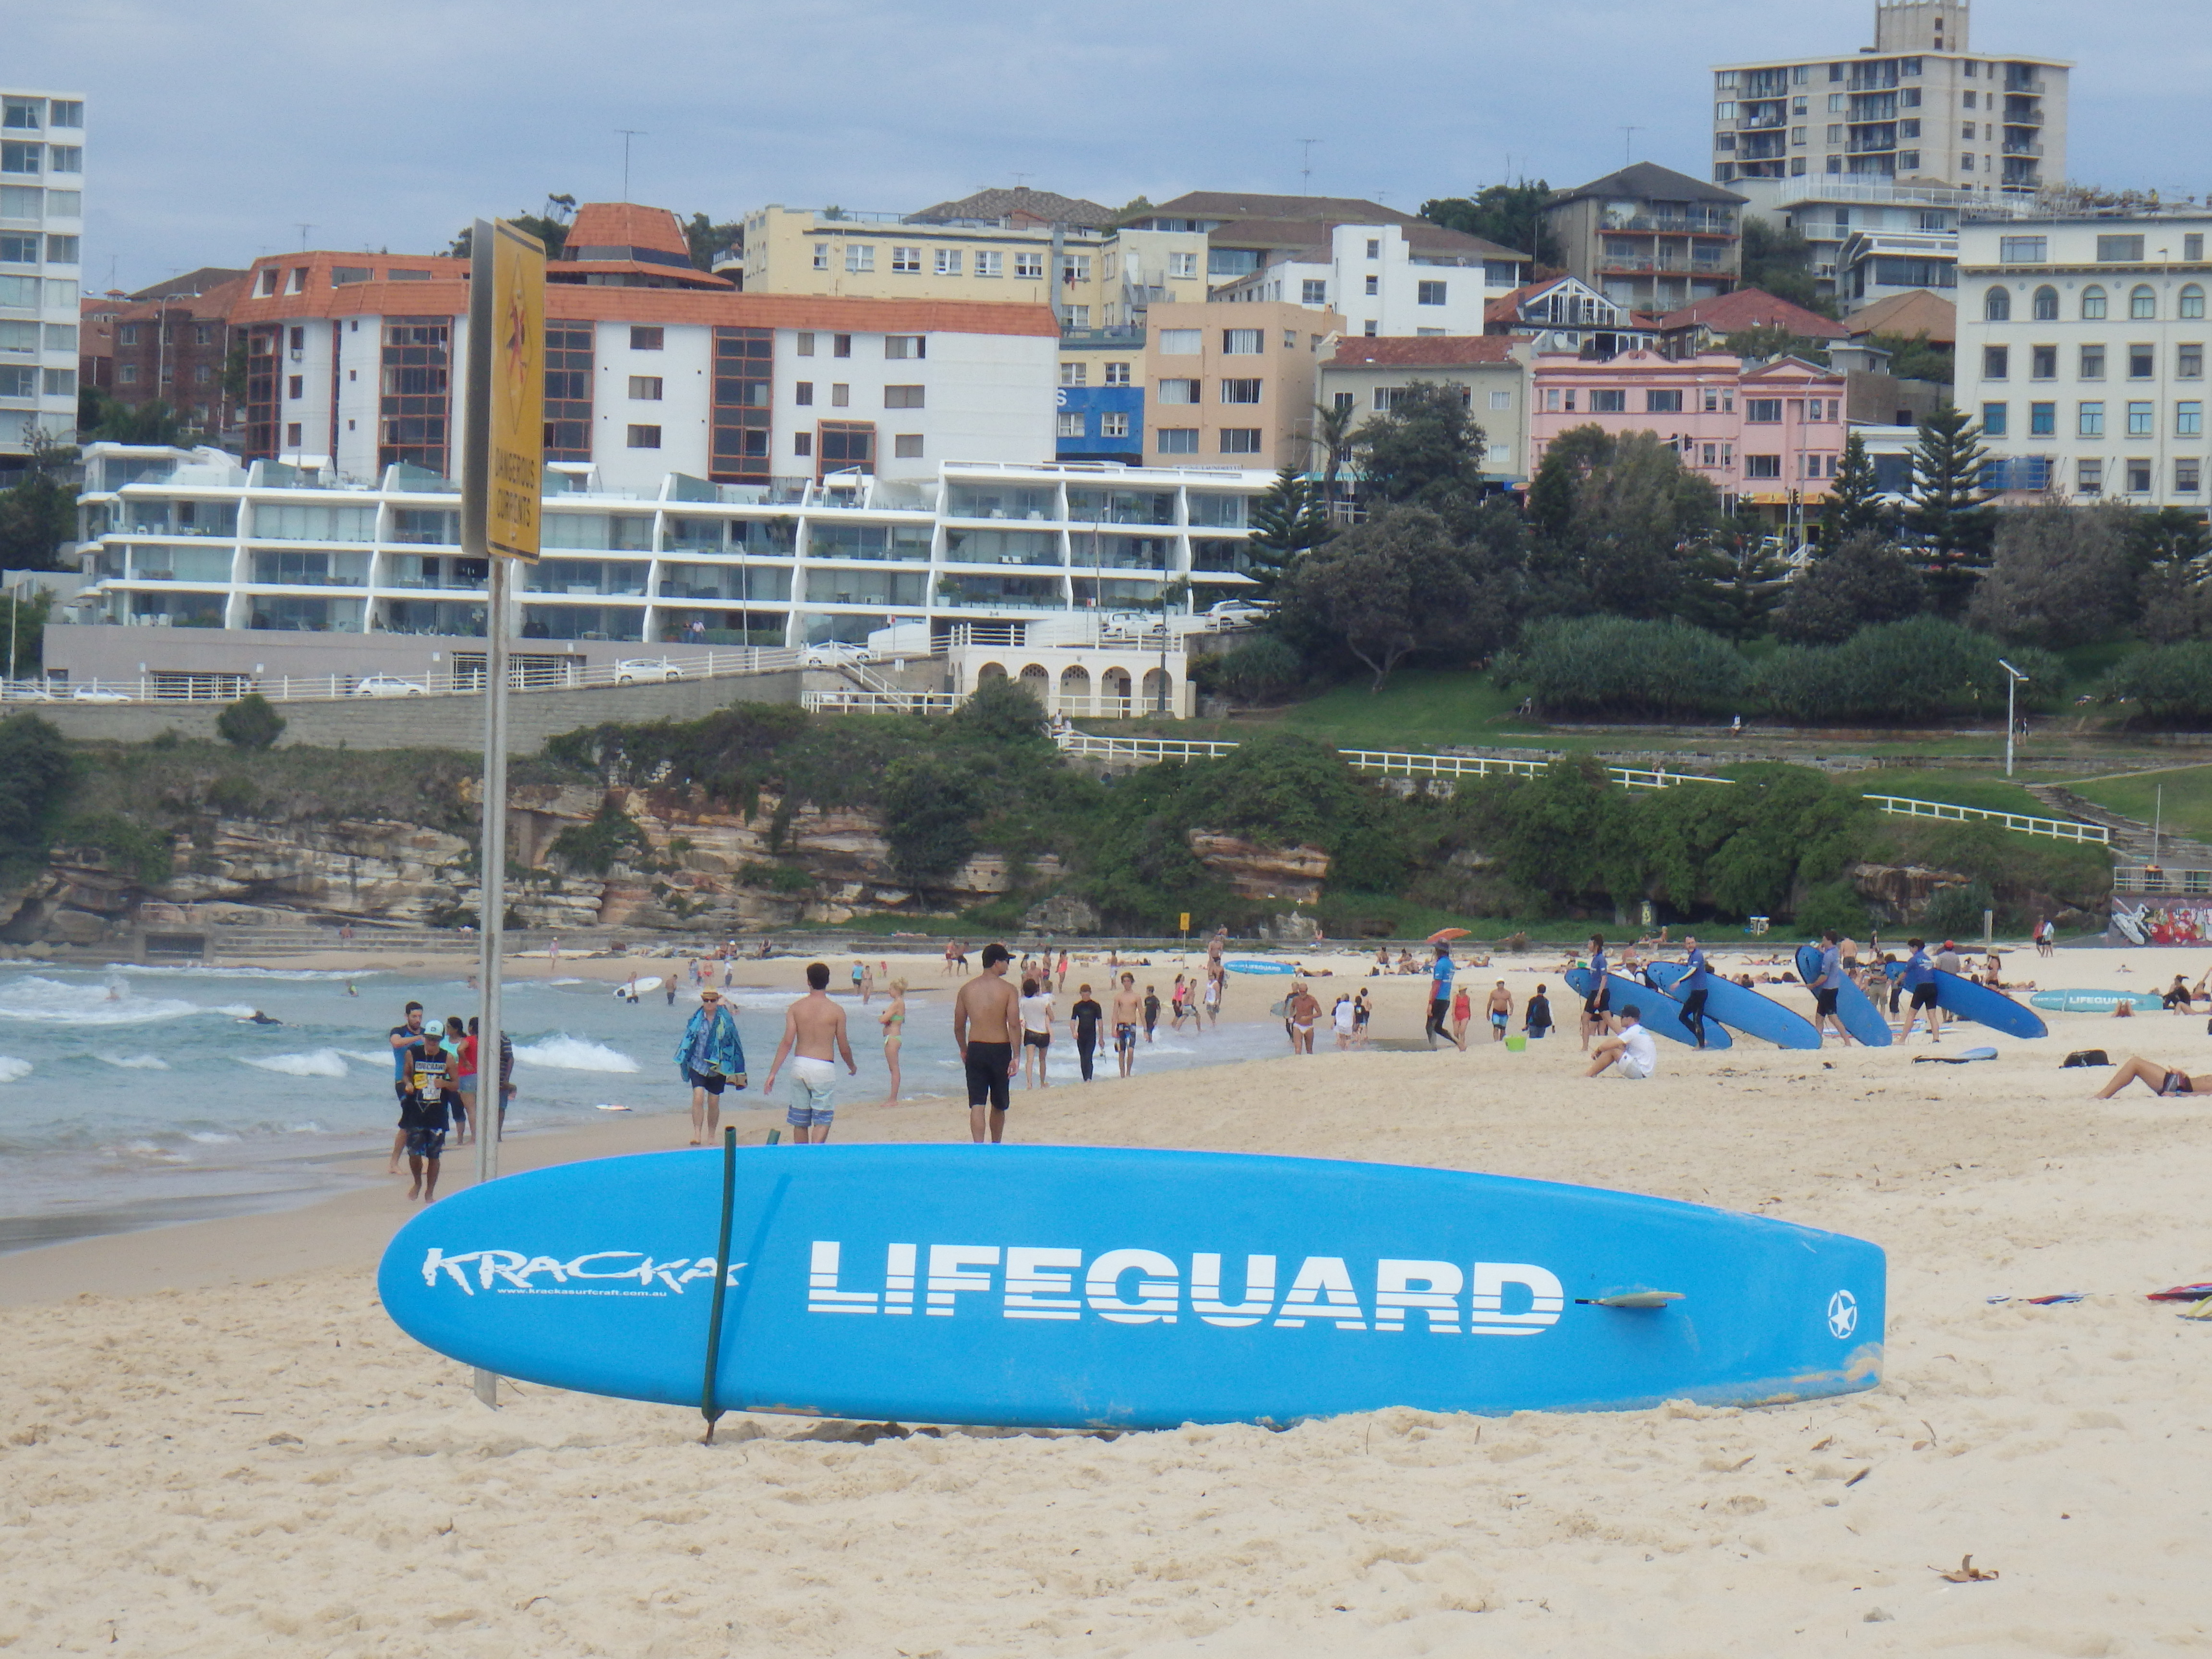 Lifeguard Surf board Bondi